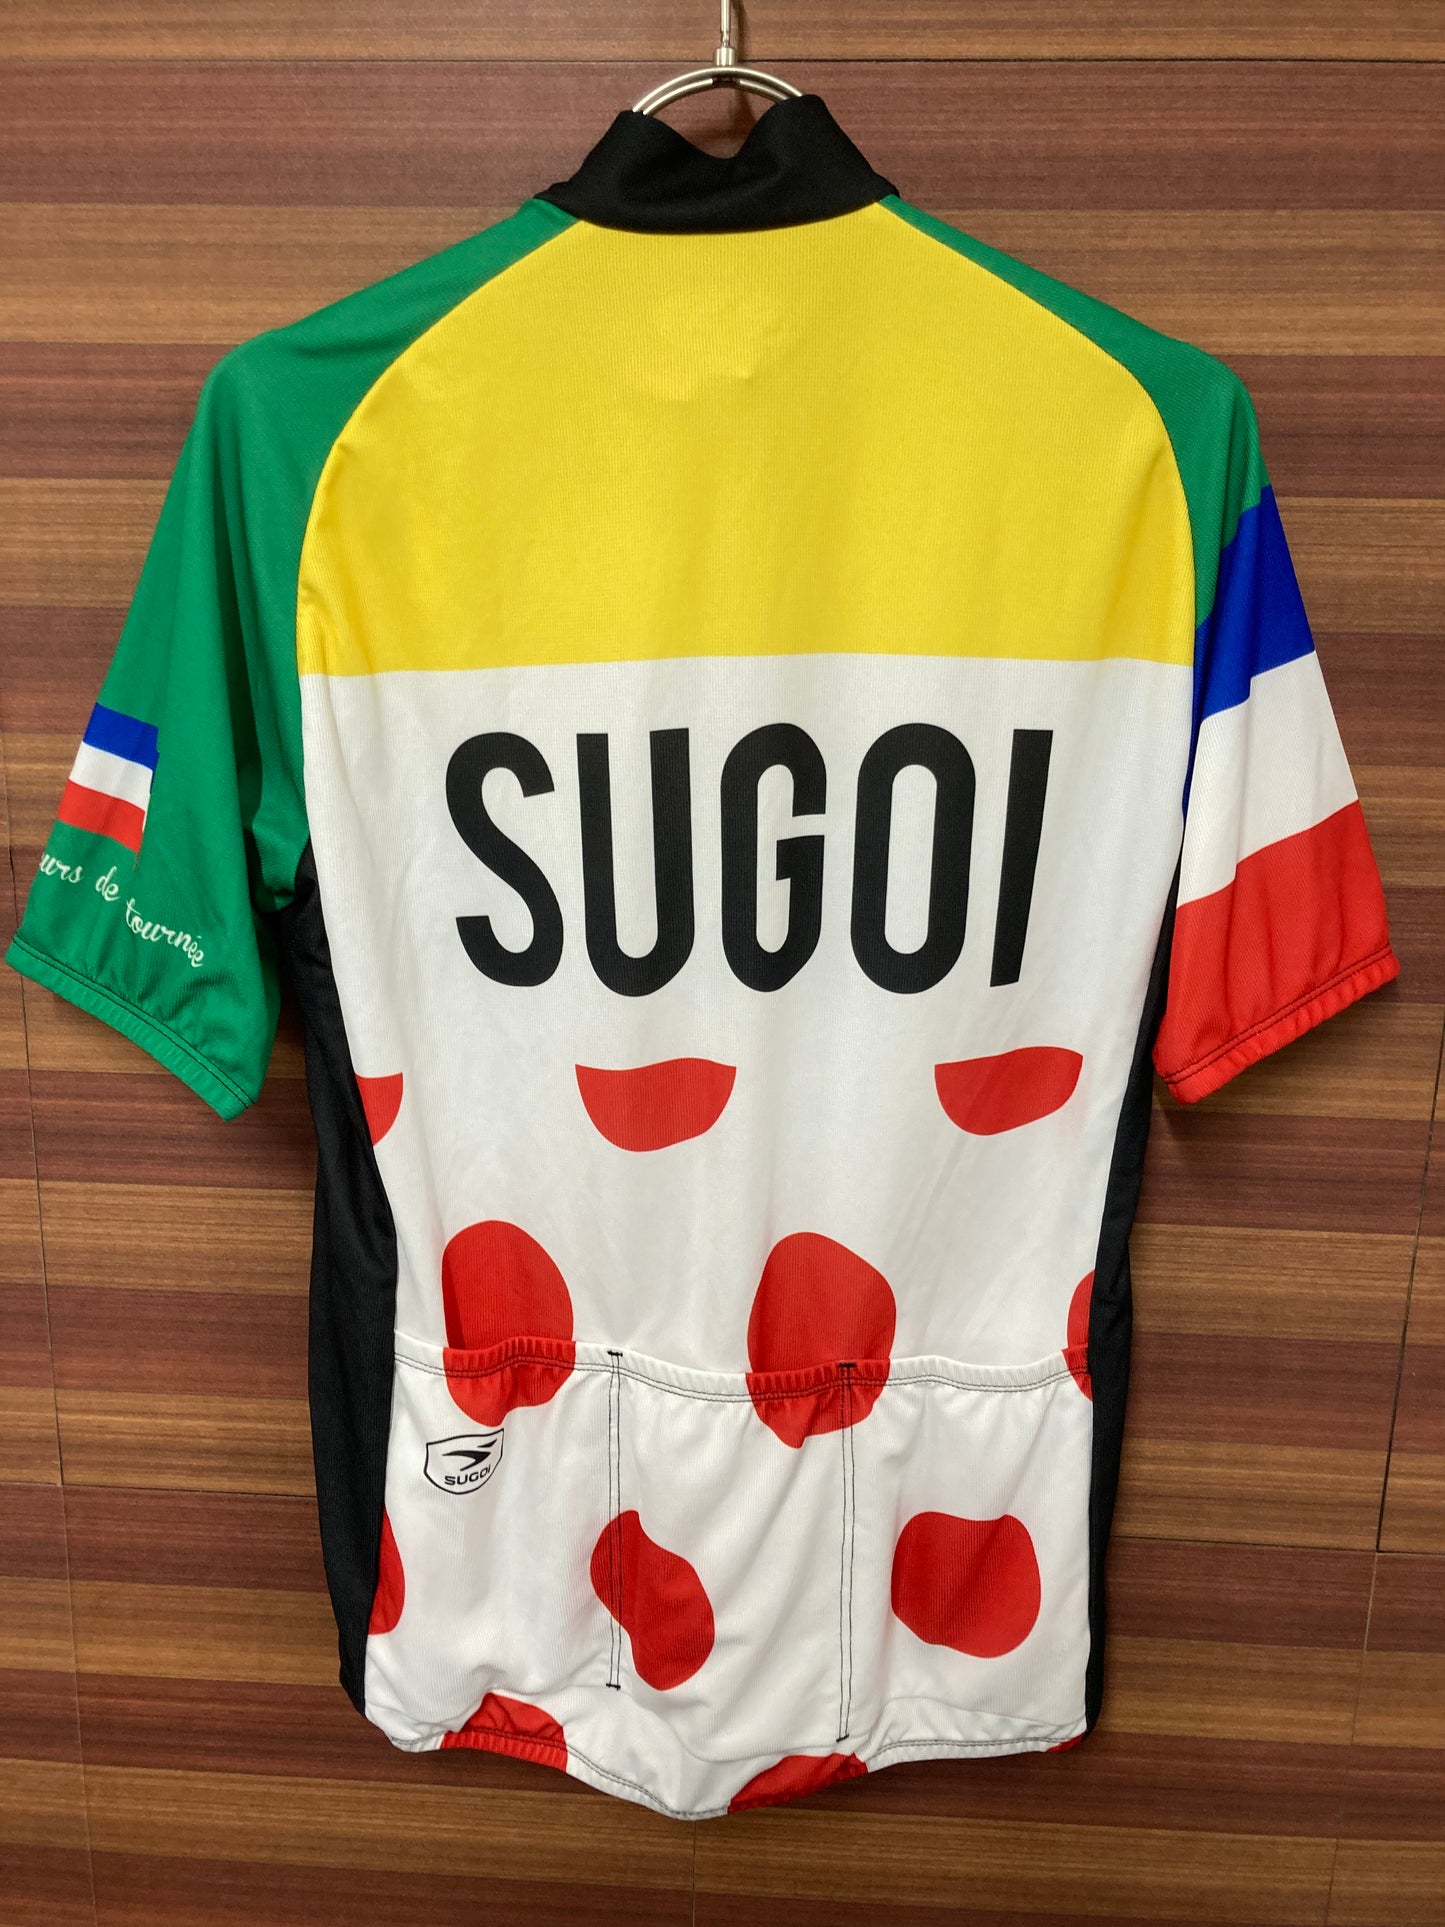 GI198 スゴイ sugoi La tournee jersey 半袖サイクルジャージ M 白緑赤